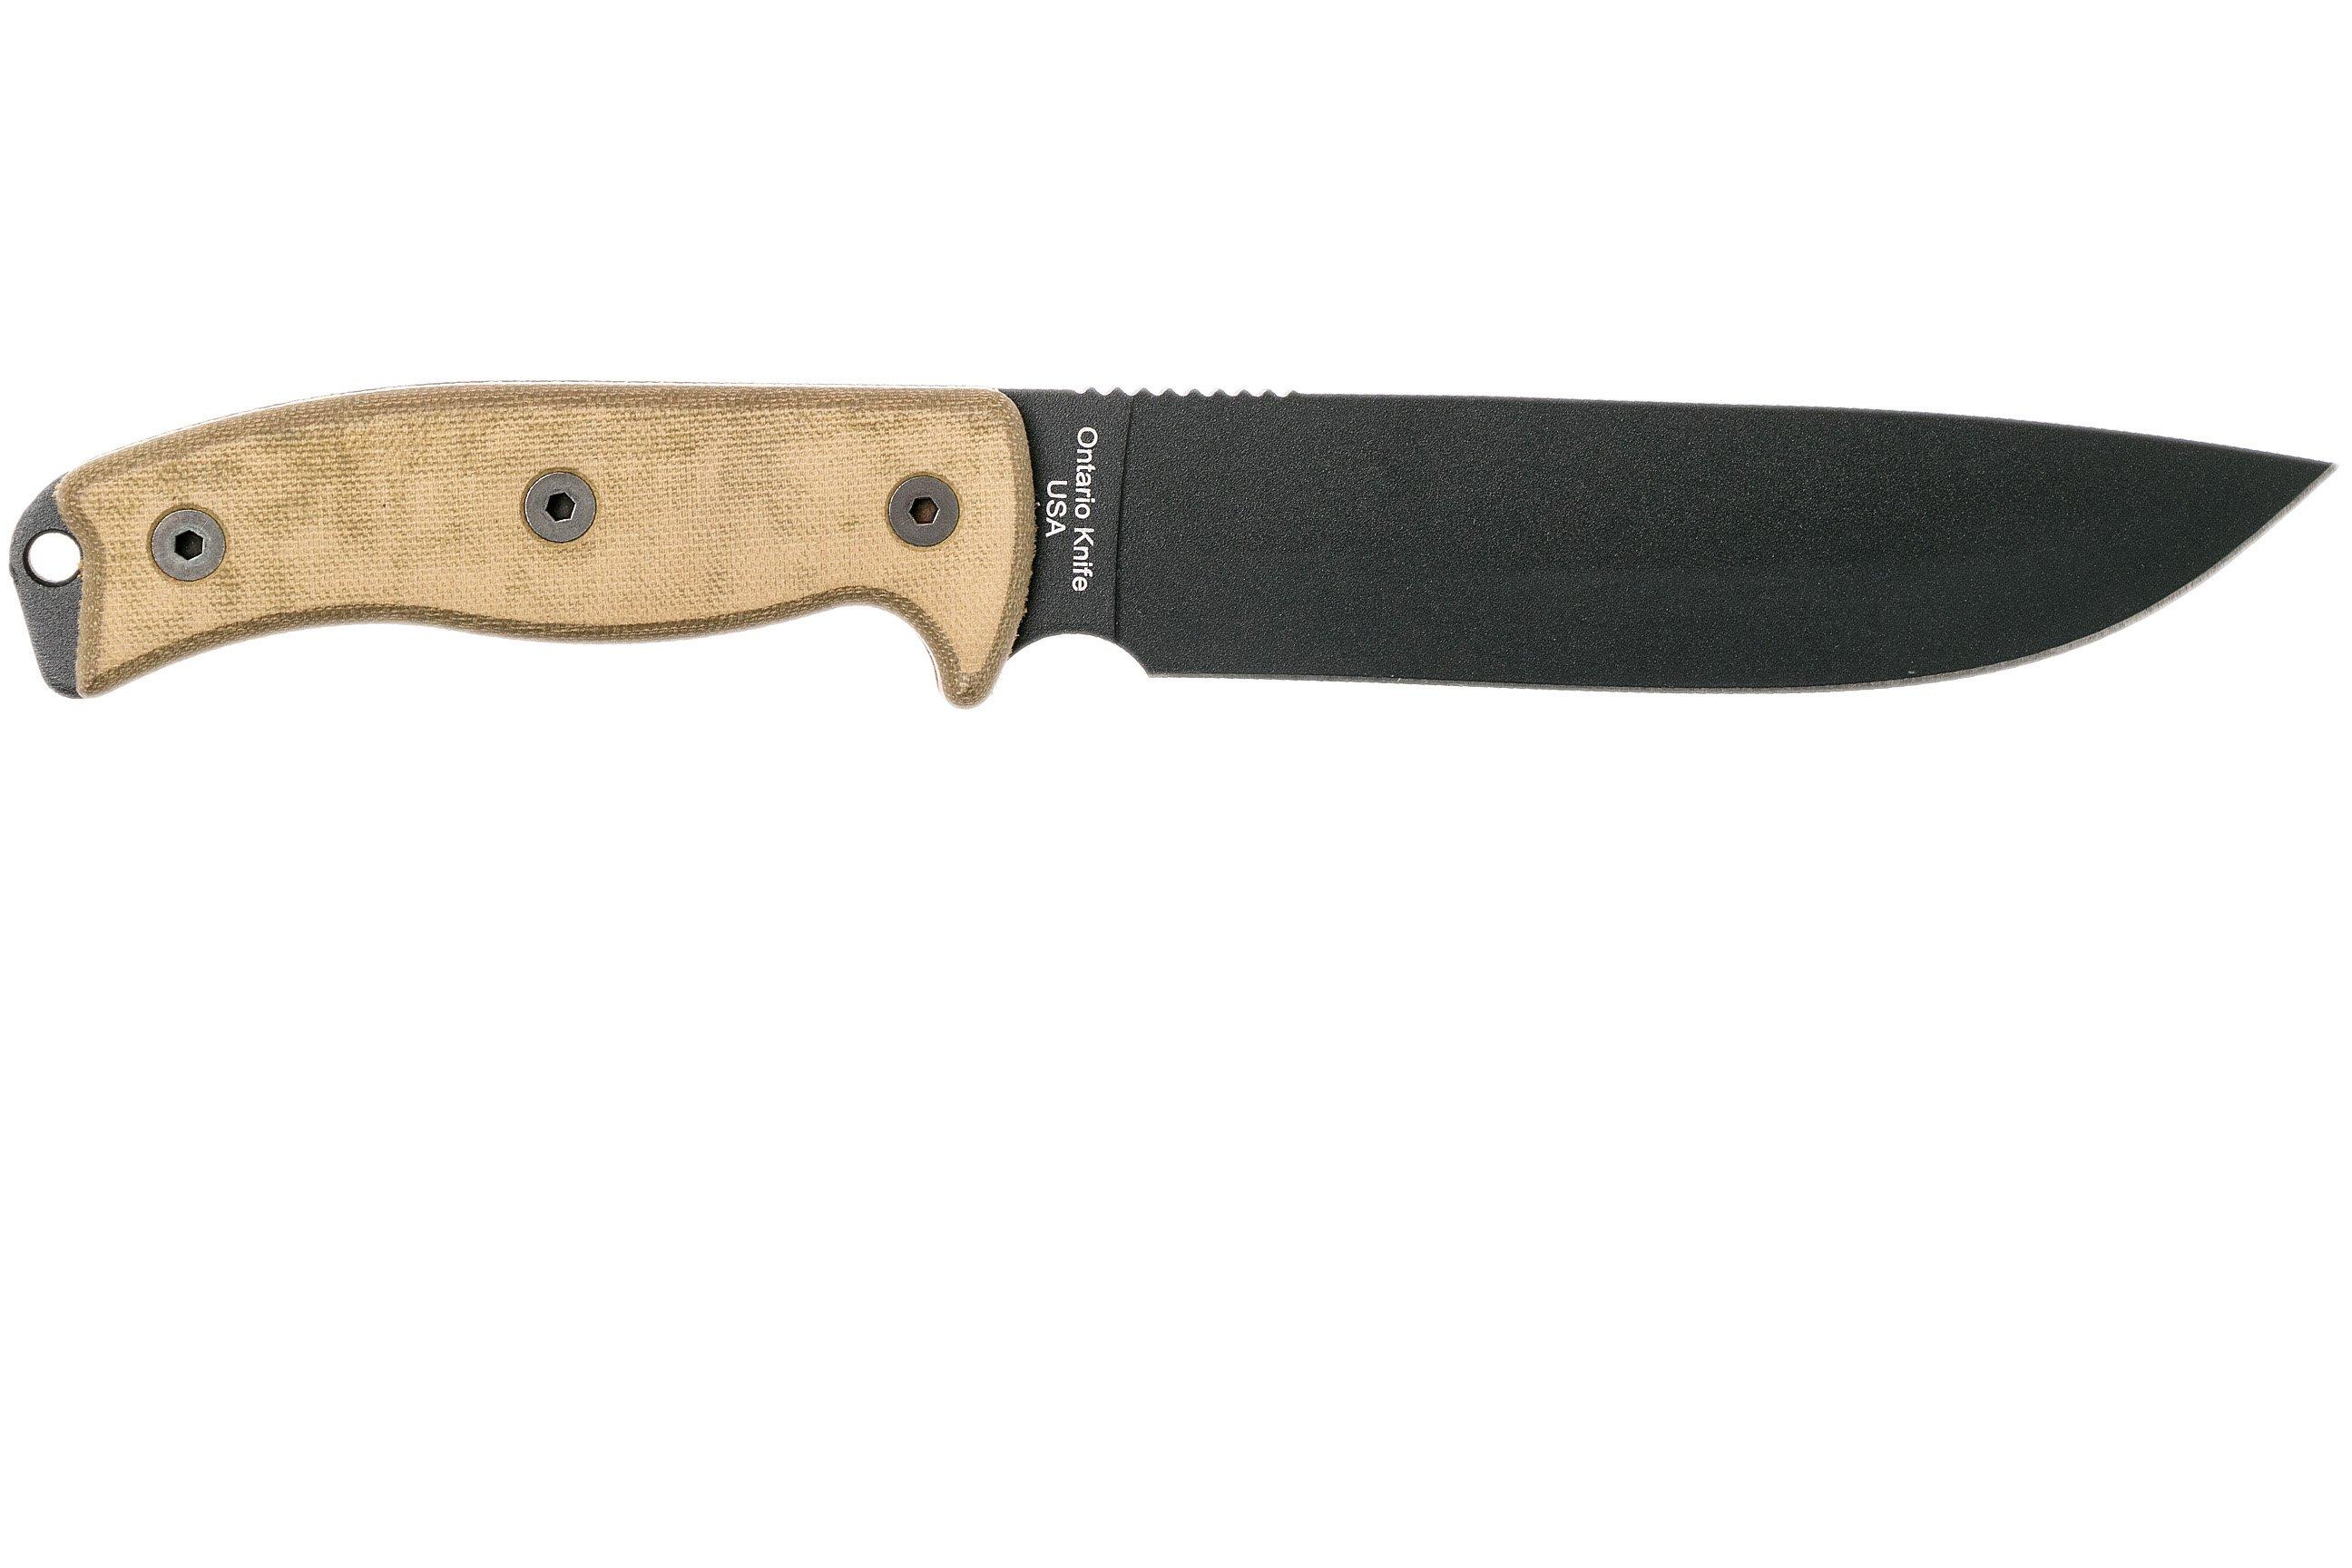 Ontario RAT-7 plain edge 8668 survival knife | Advantageously shopping ...